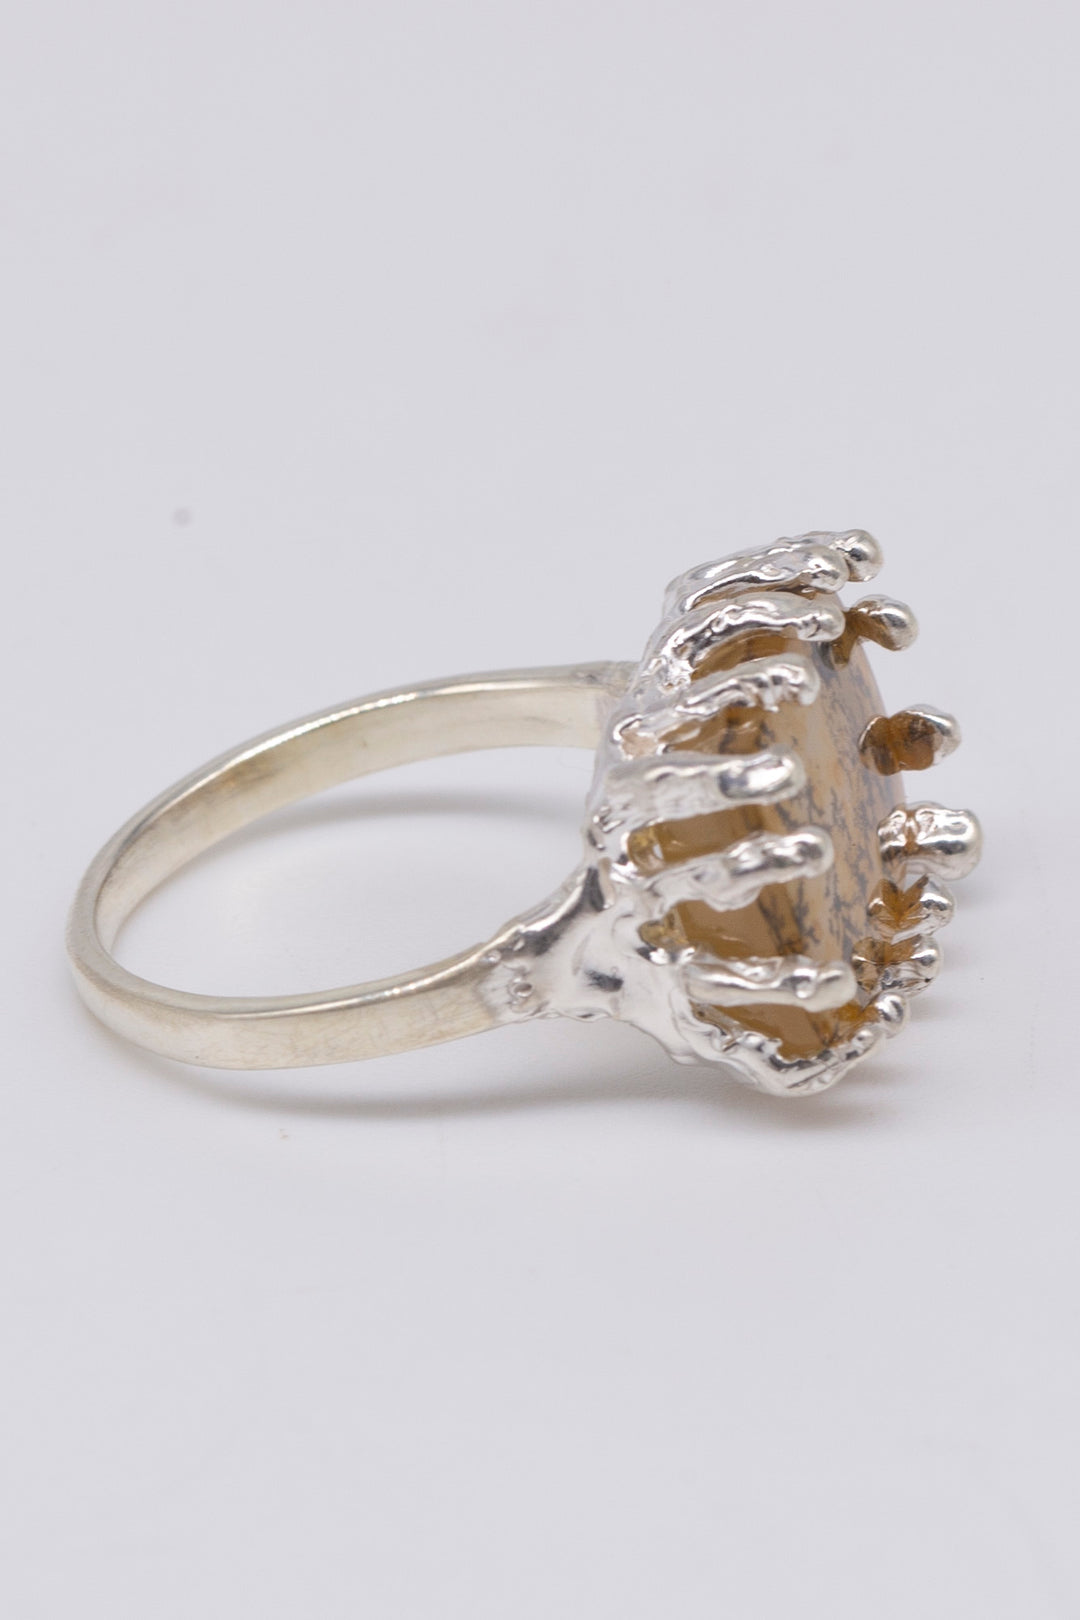 dendritic quartz ring